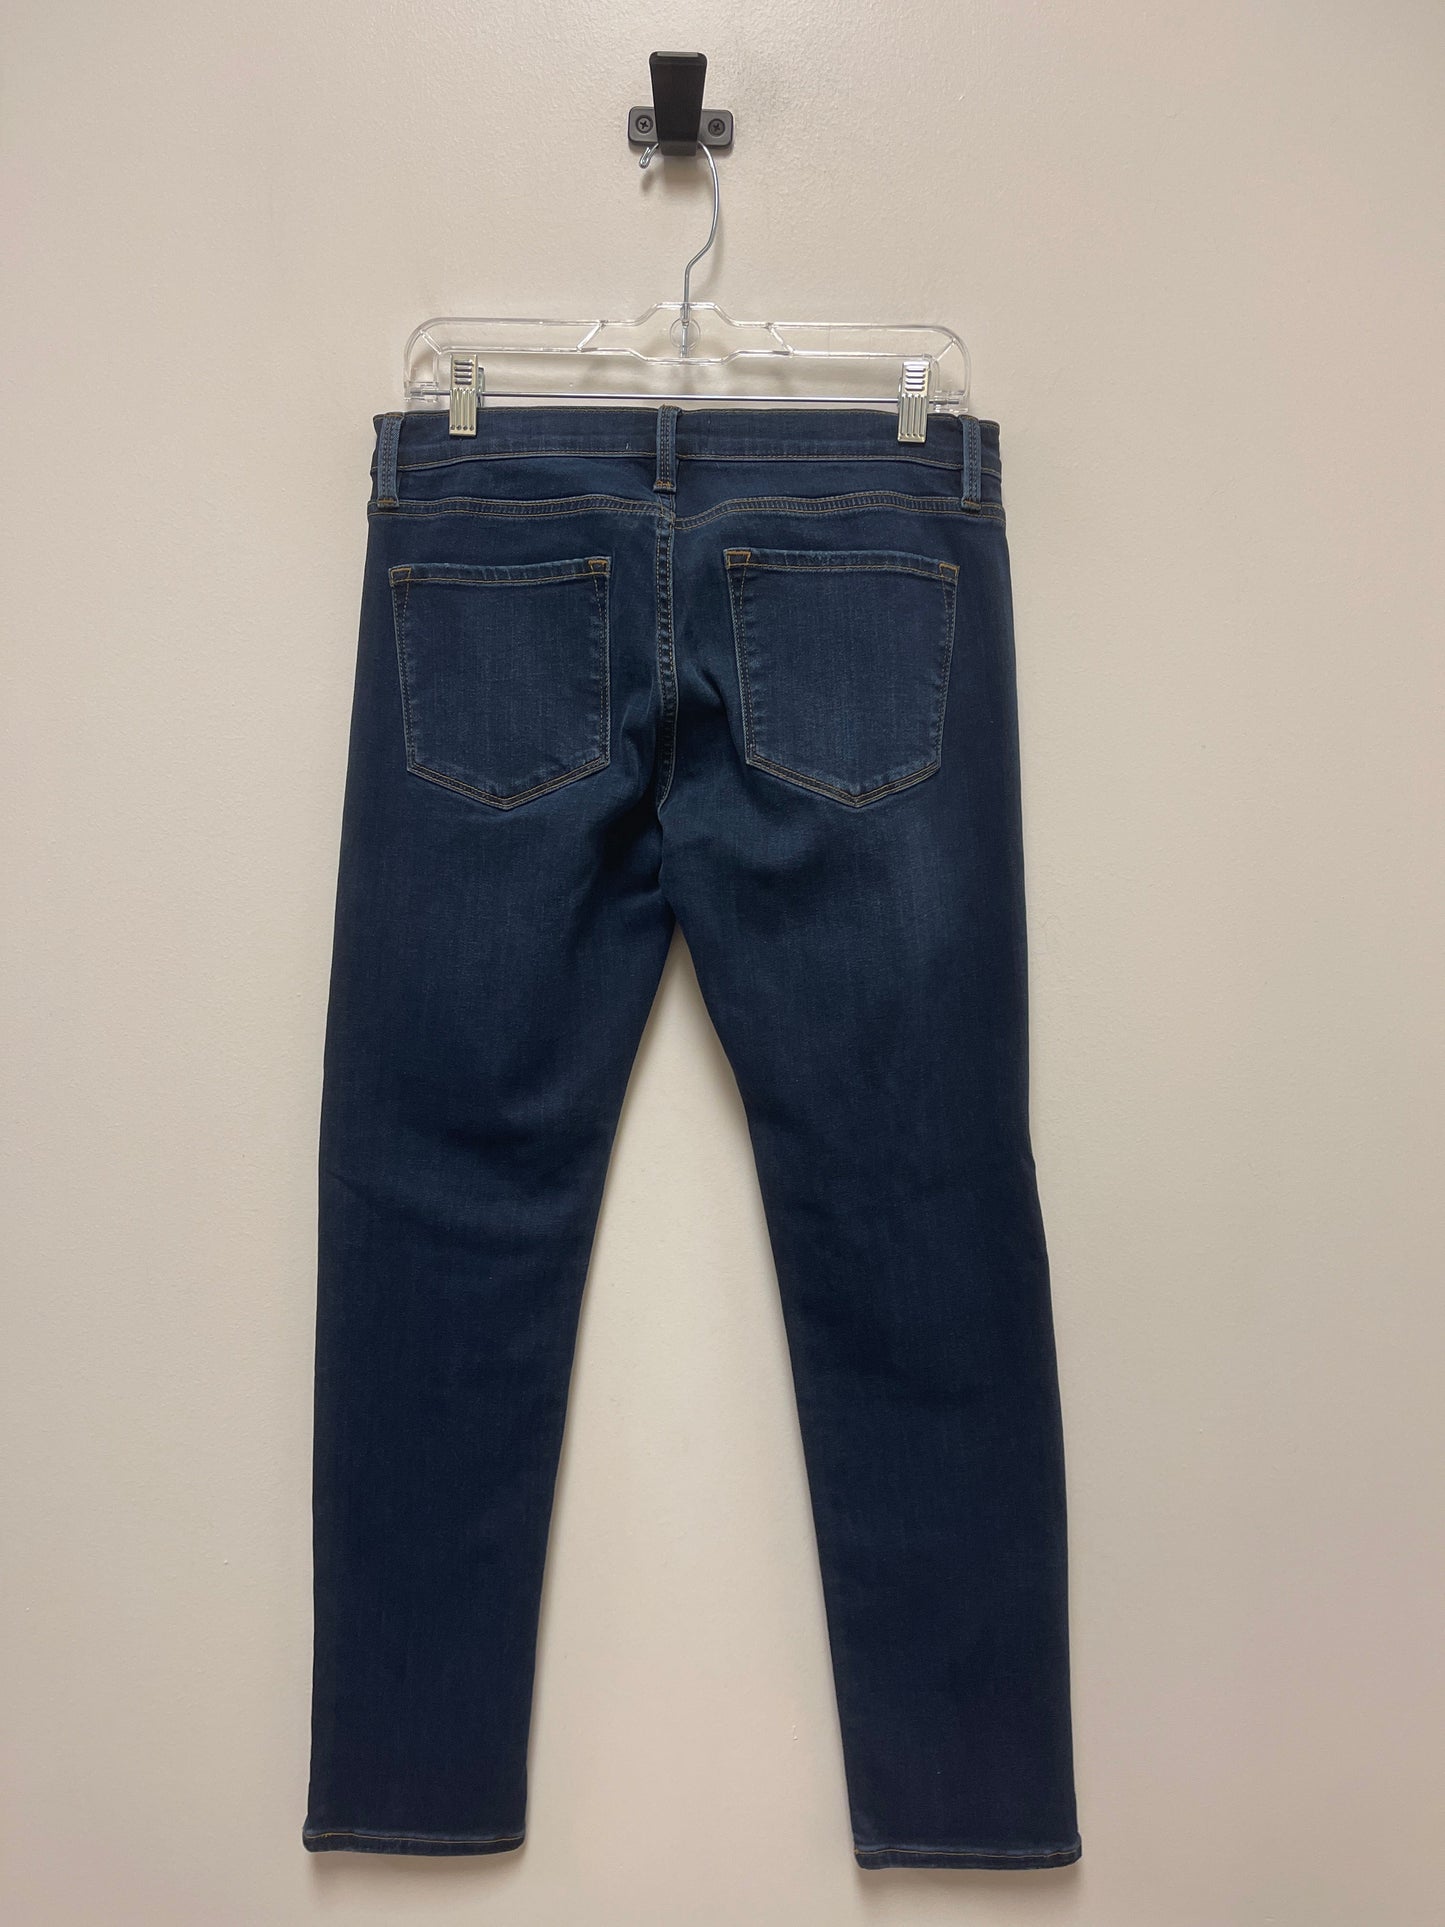 Jeans Skinny By Frame  Size: 4